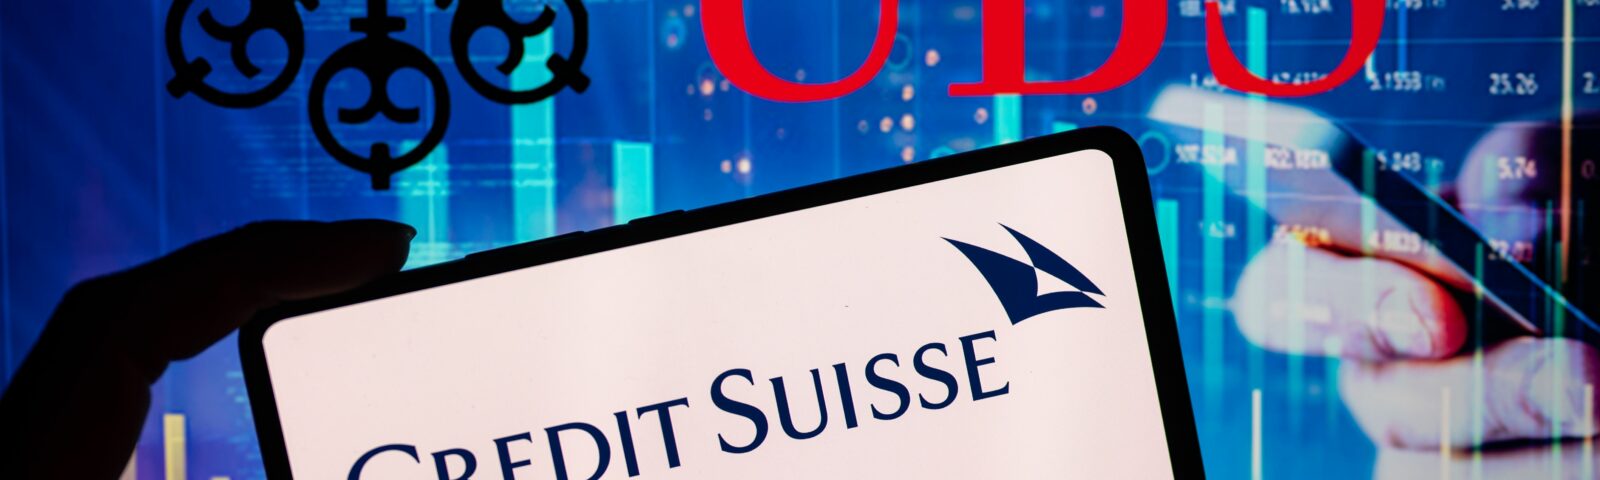 La caída de Credit Suisse da alas a PSD2